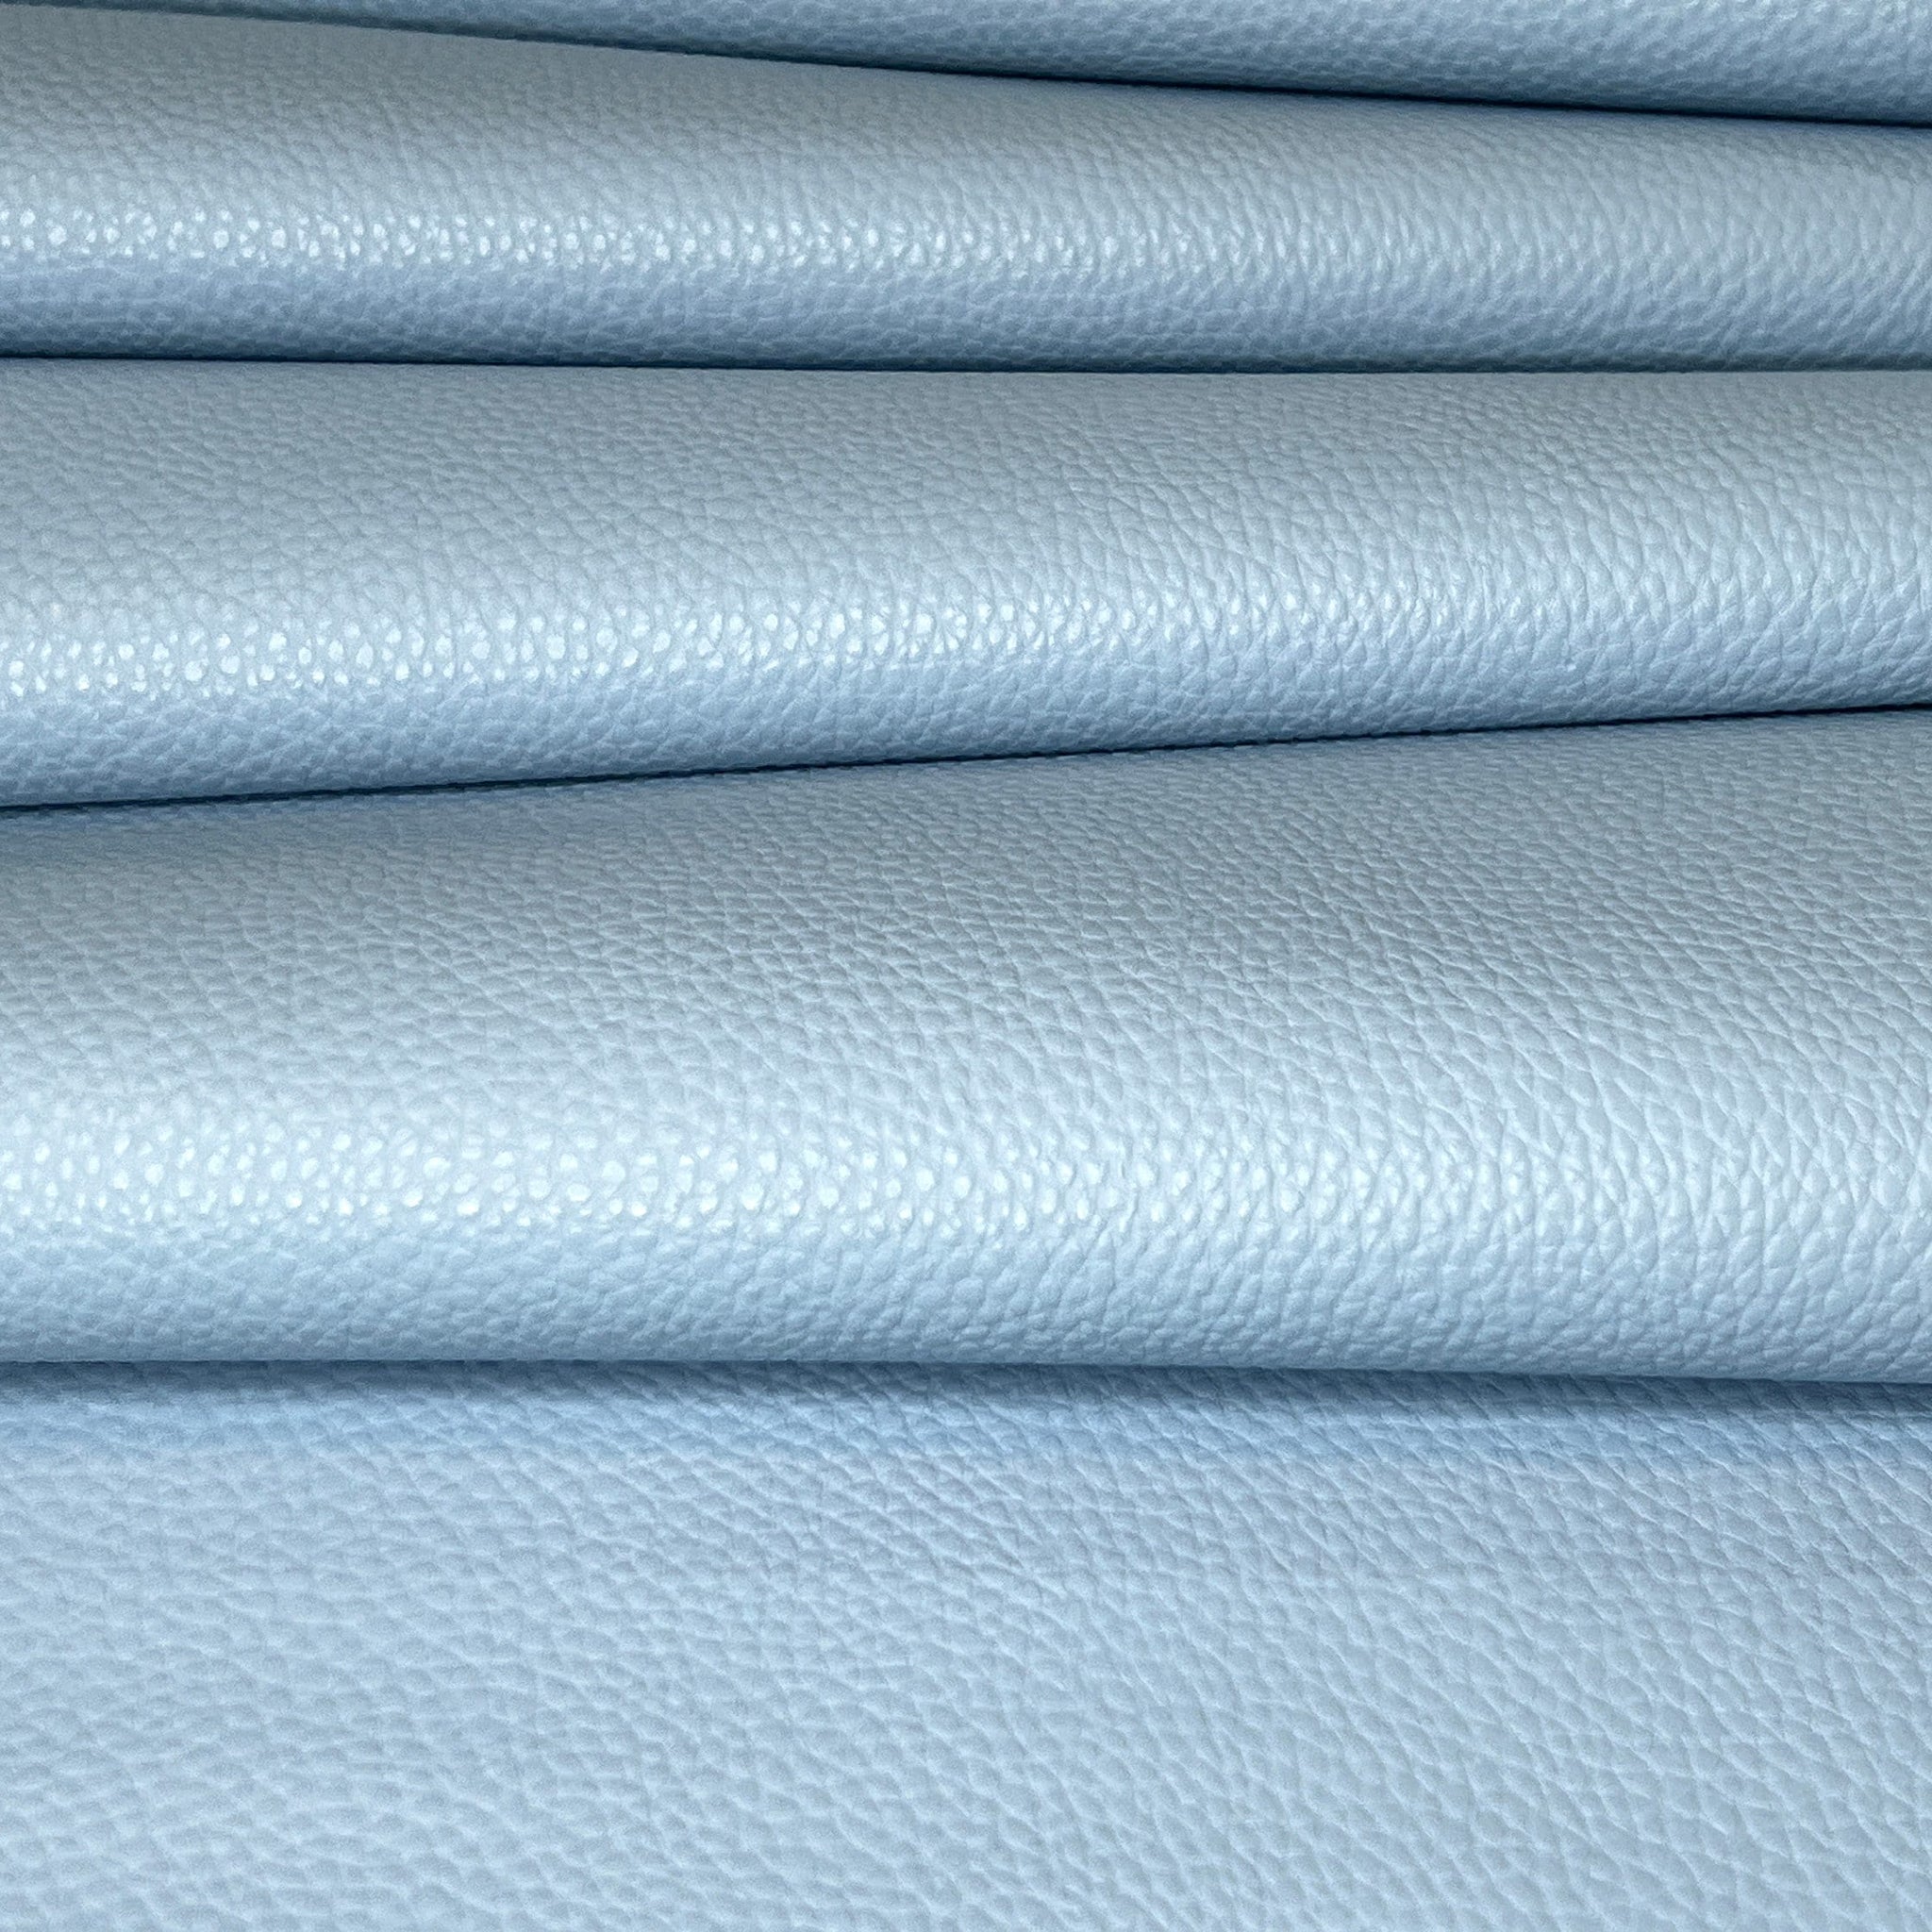 Lightweight Faux Leather - Sky Blue Textured Vinyl